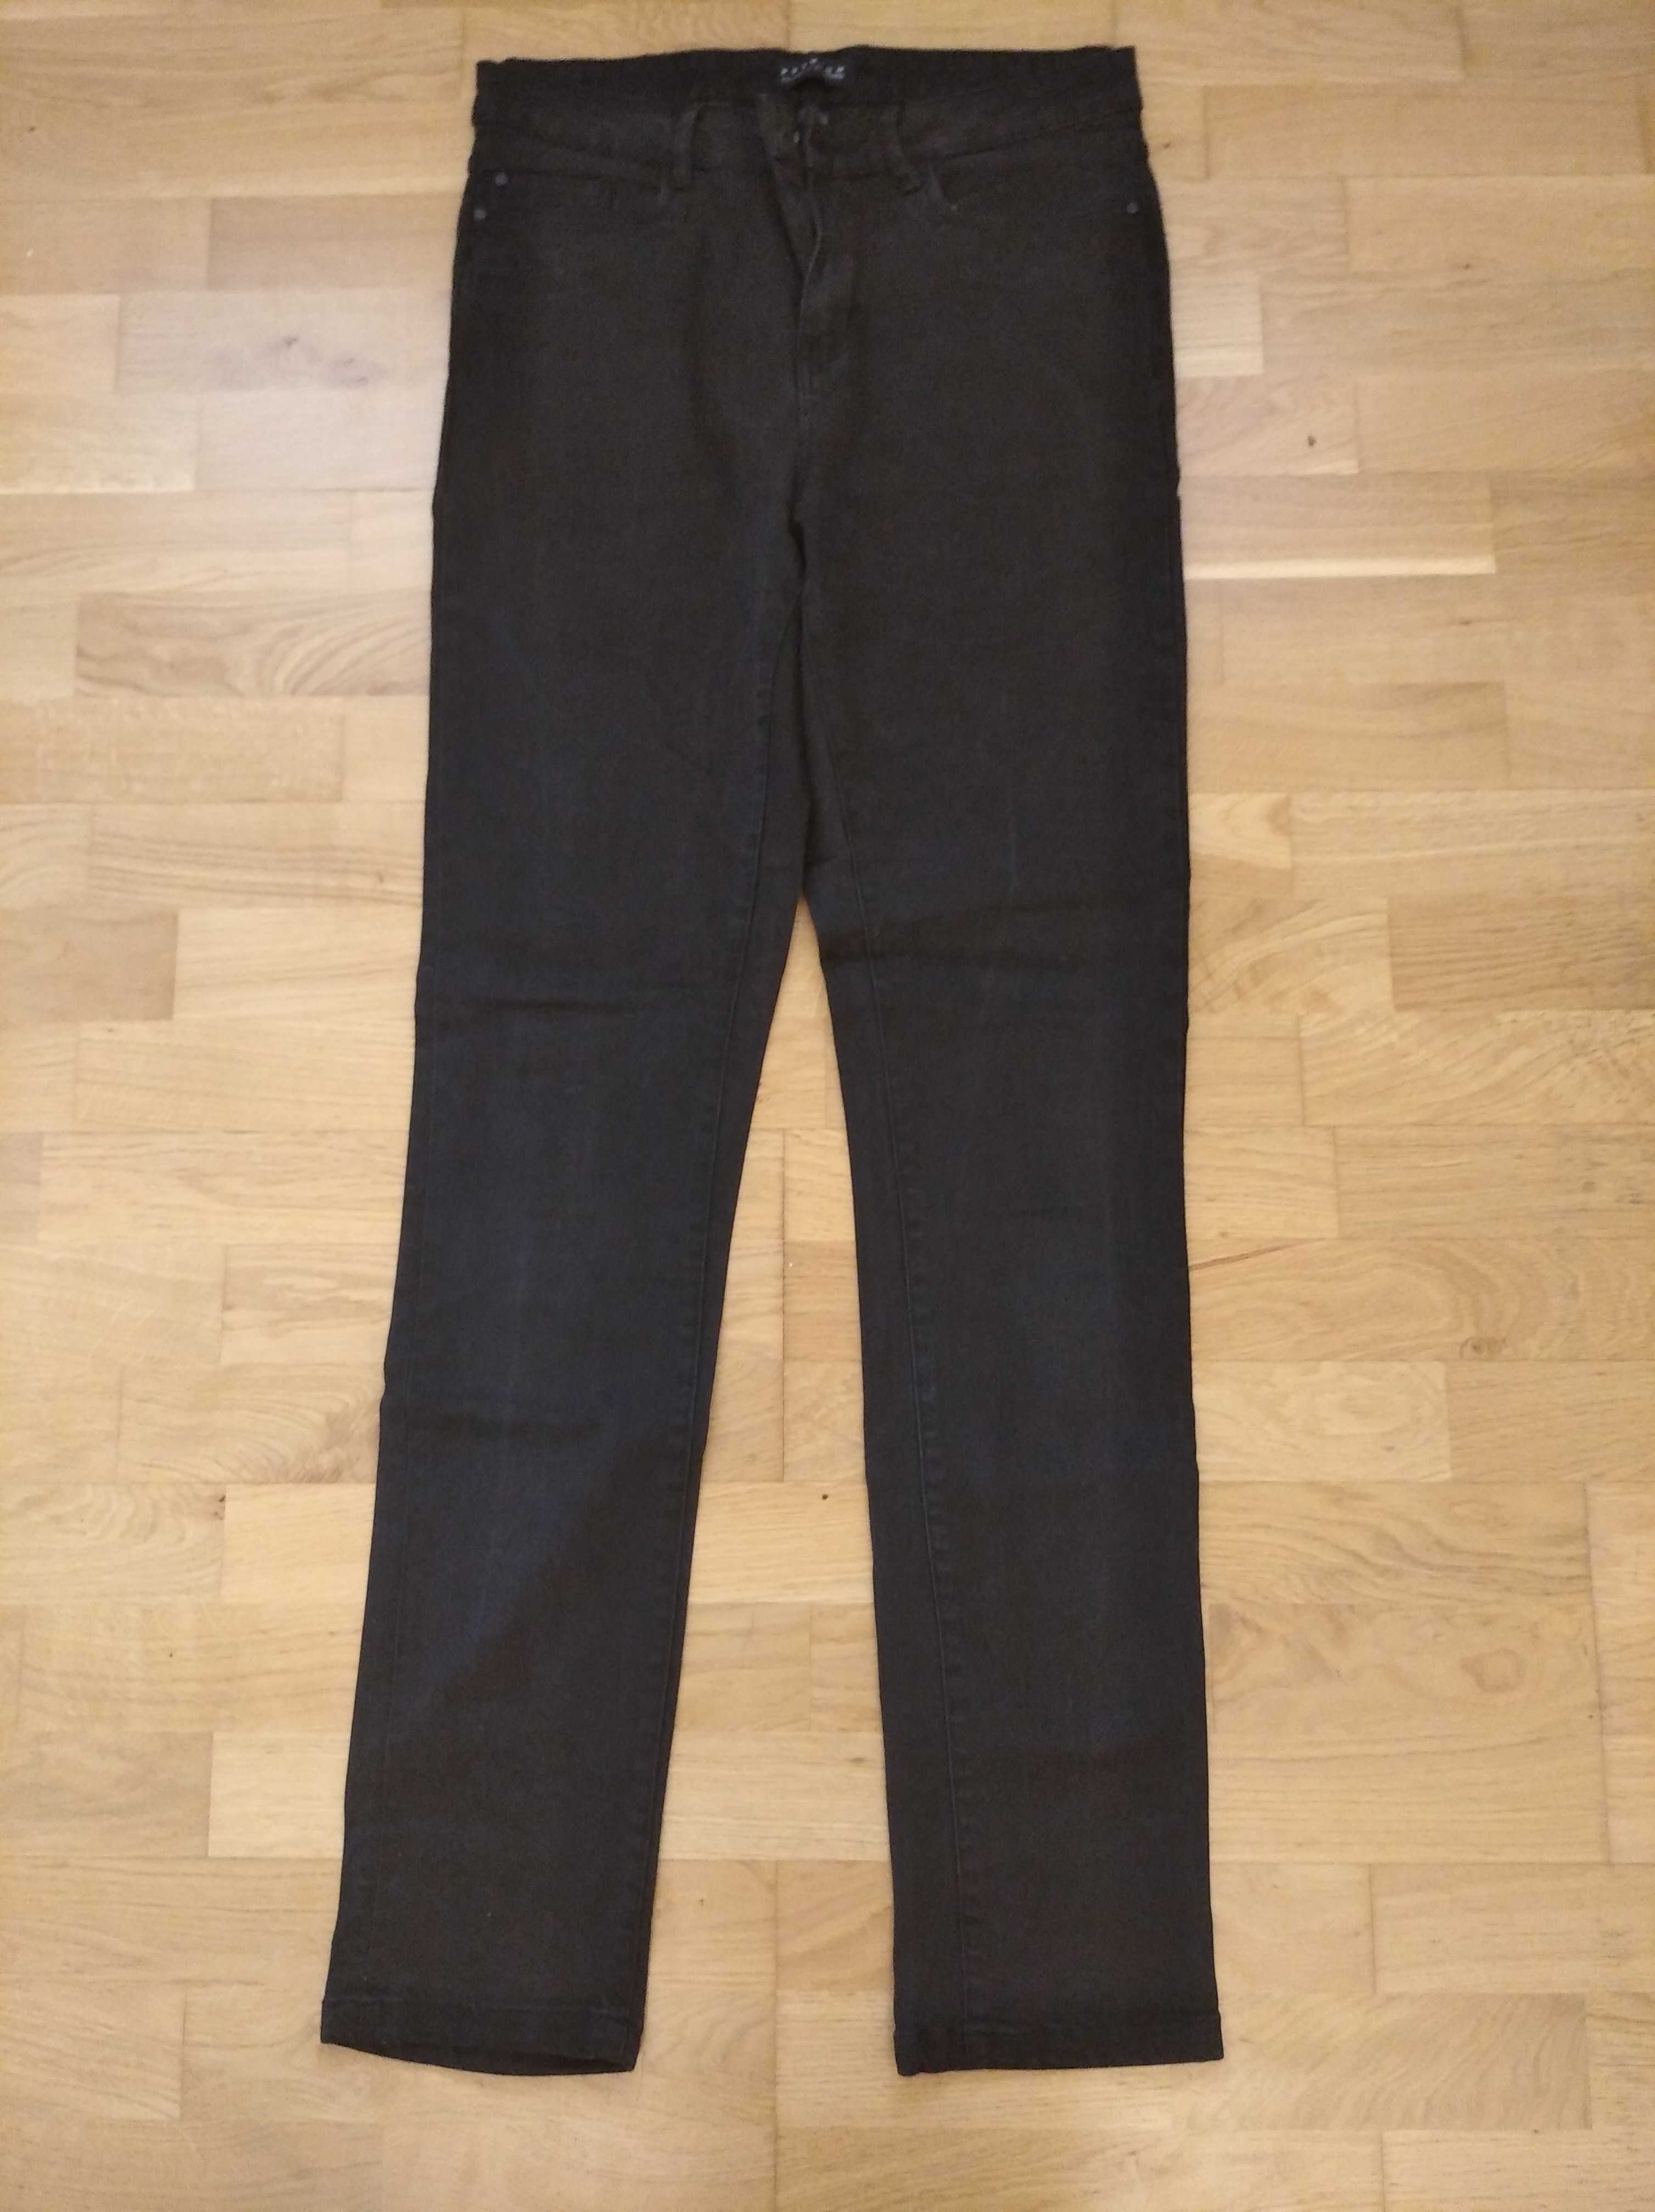 Spodnie damskie Esmara Premium 40 czarne jeansy skinny fit medium wais